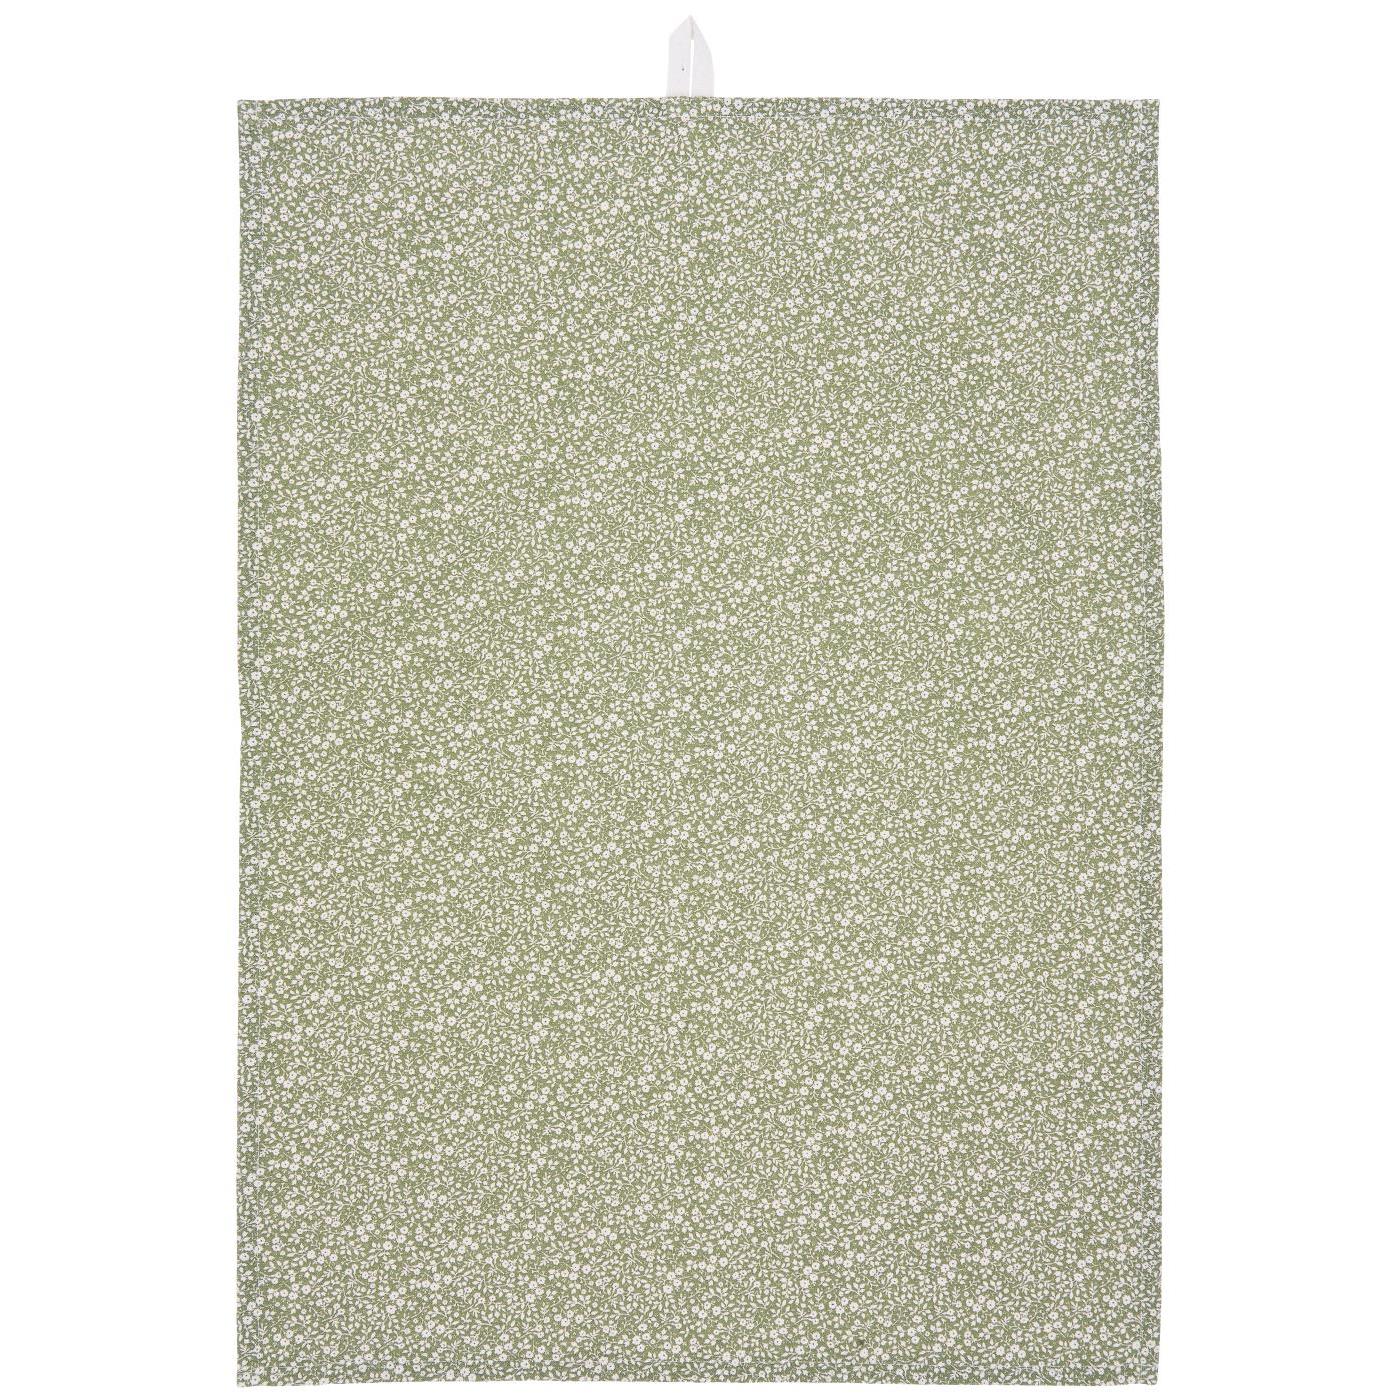 Sofie Tea Towel - Green w/ Natural Flowers